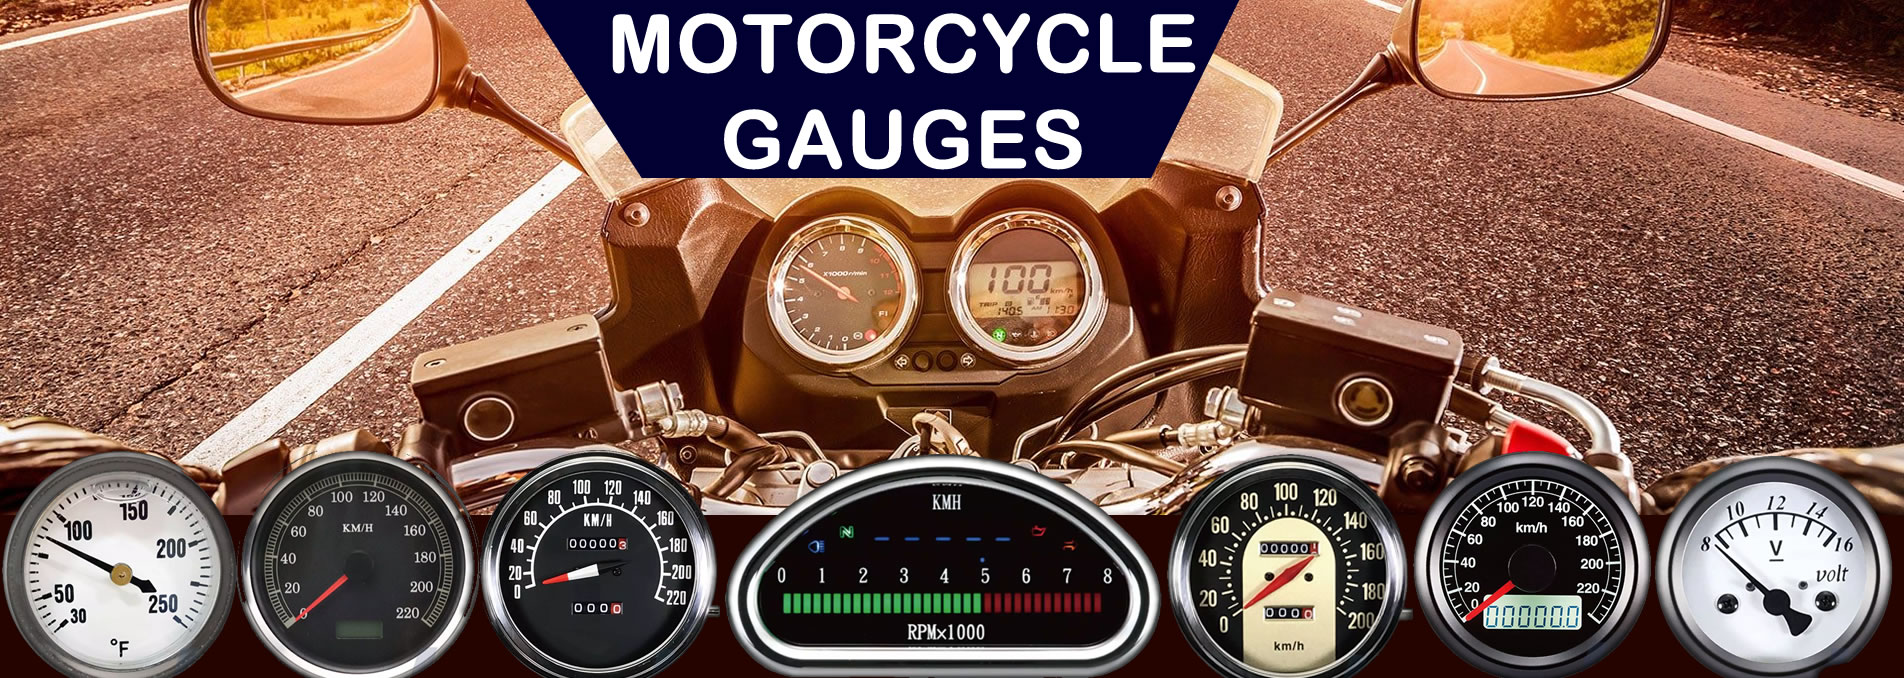 mototcycles gauges